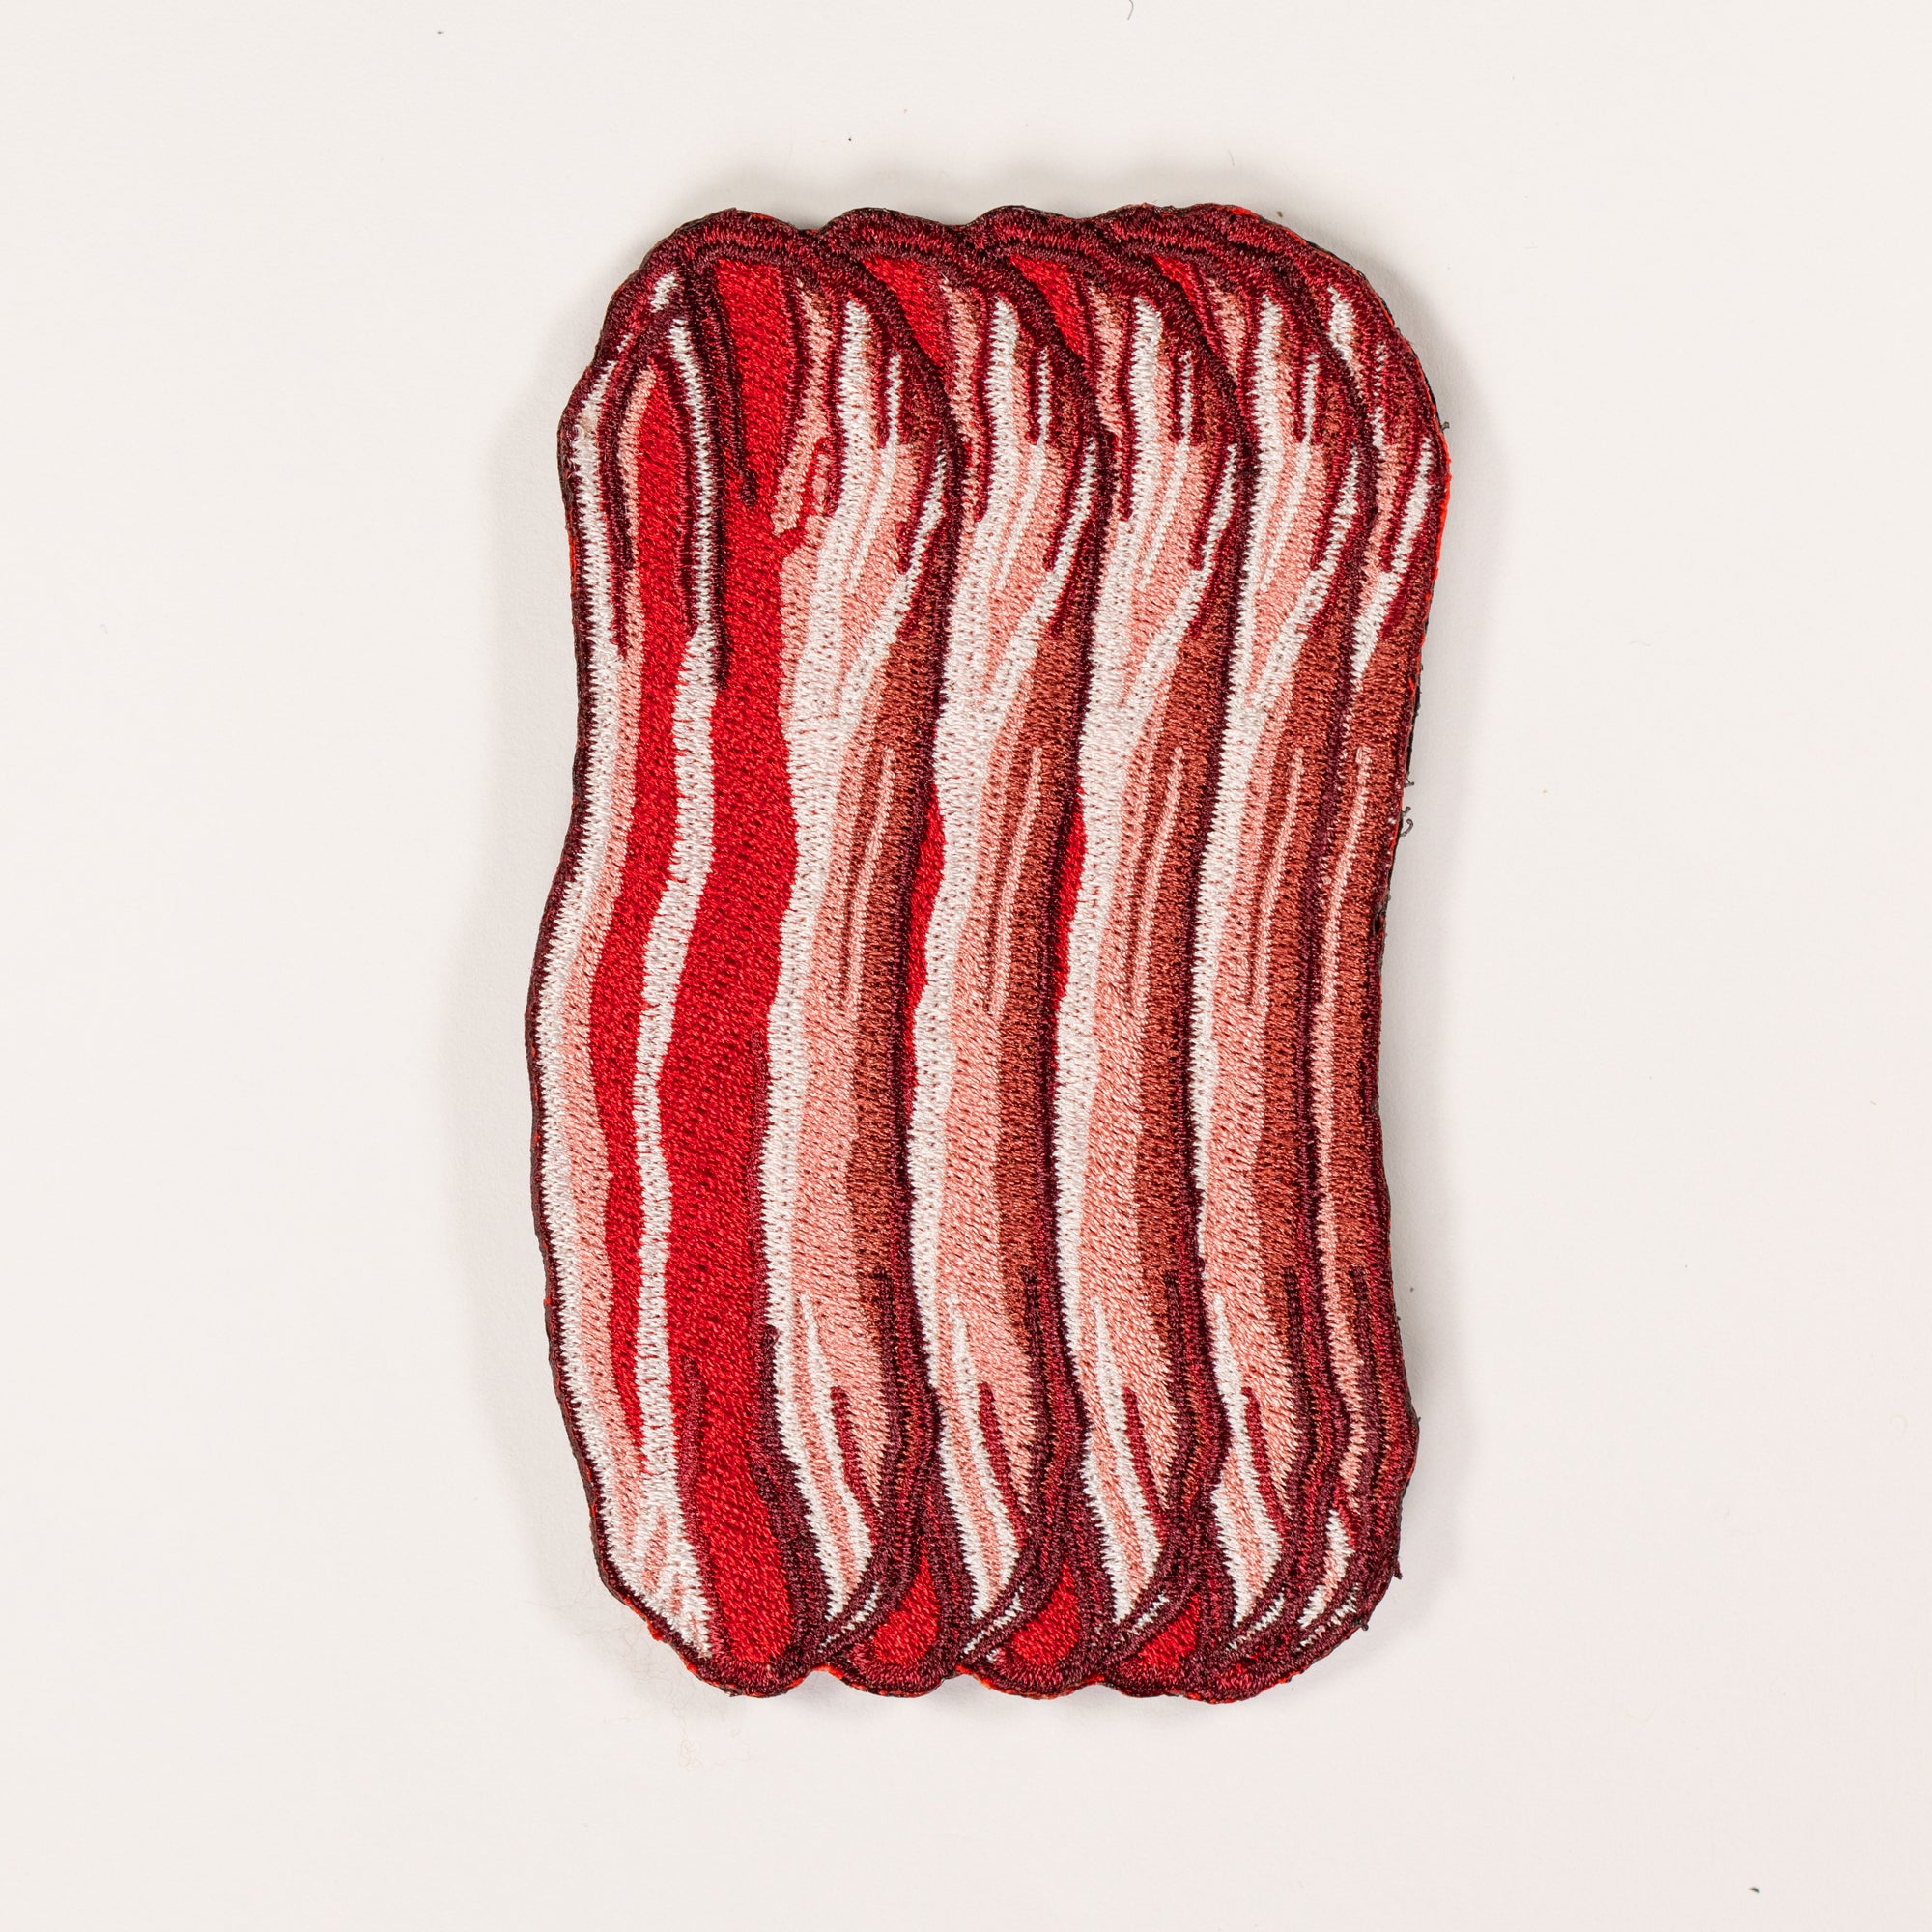 Bacon Slices